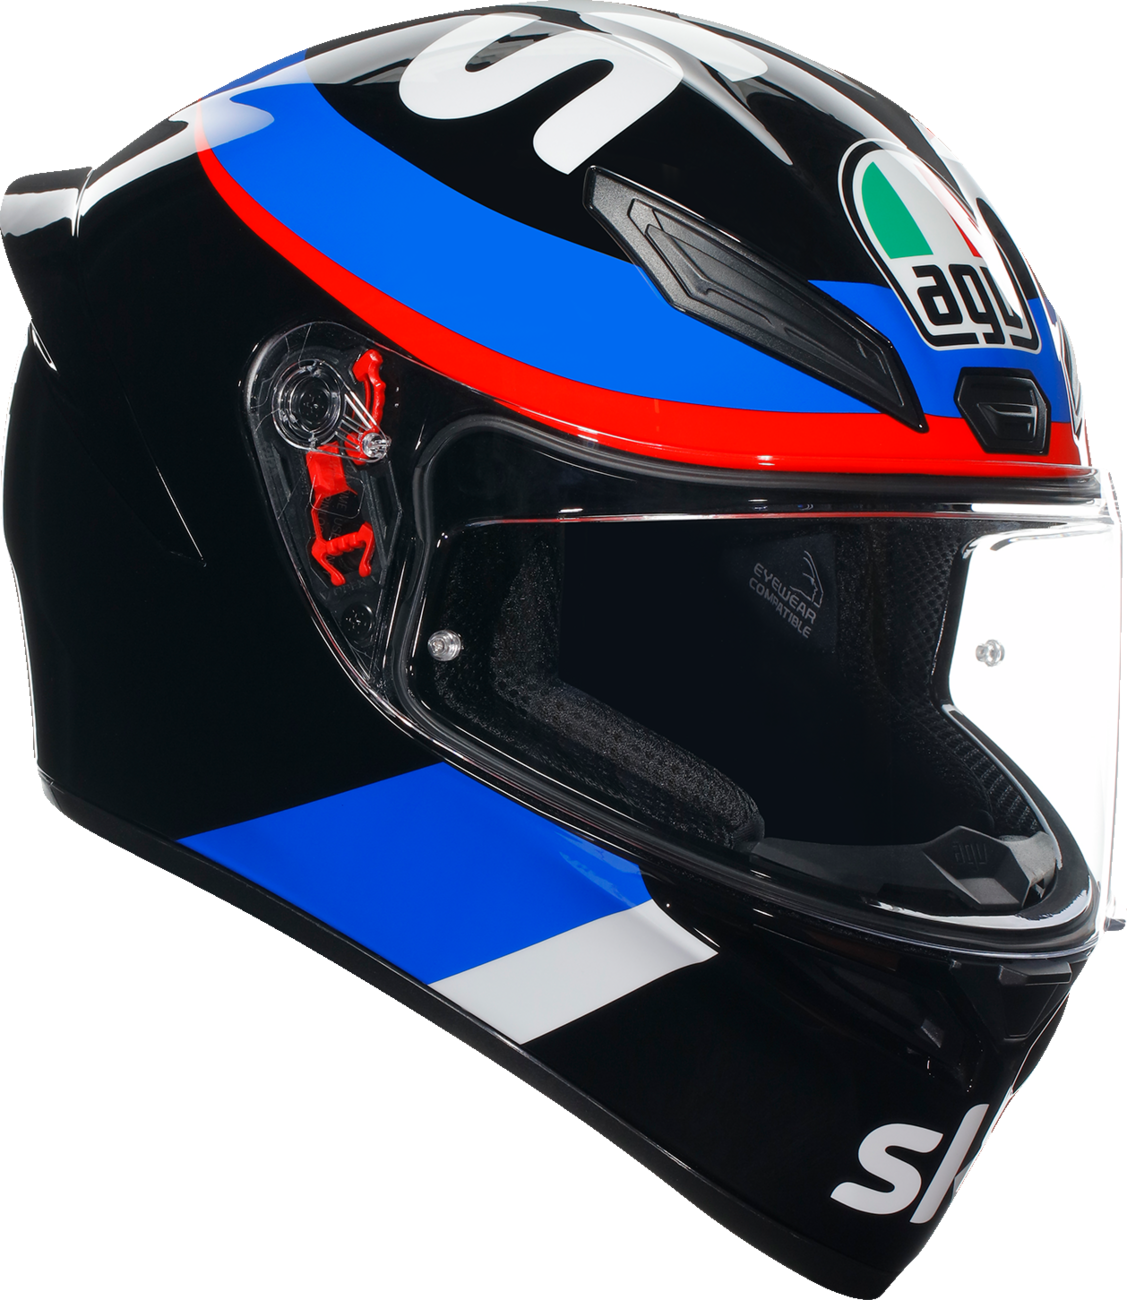 AGV K1 S VR46 Sky Racing Team Unisex Adult Motorcycle Street Full Face Helmet